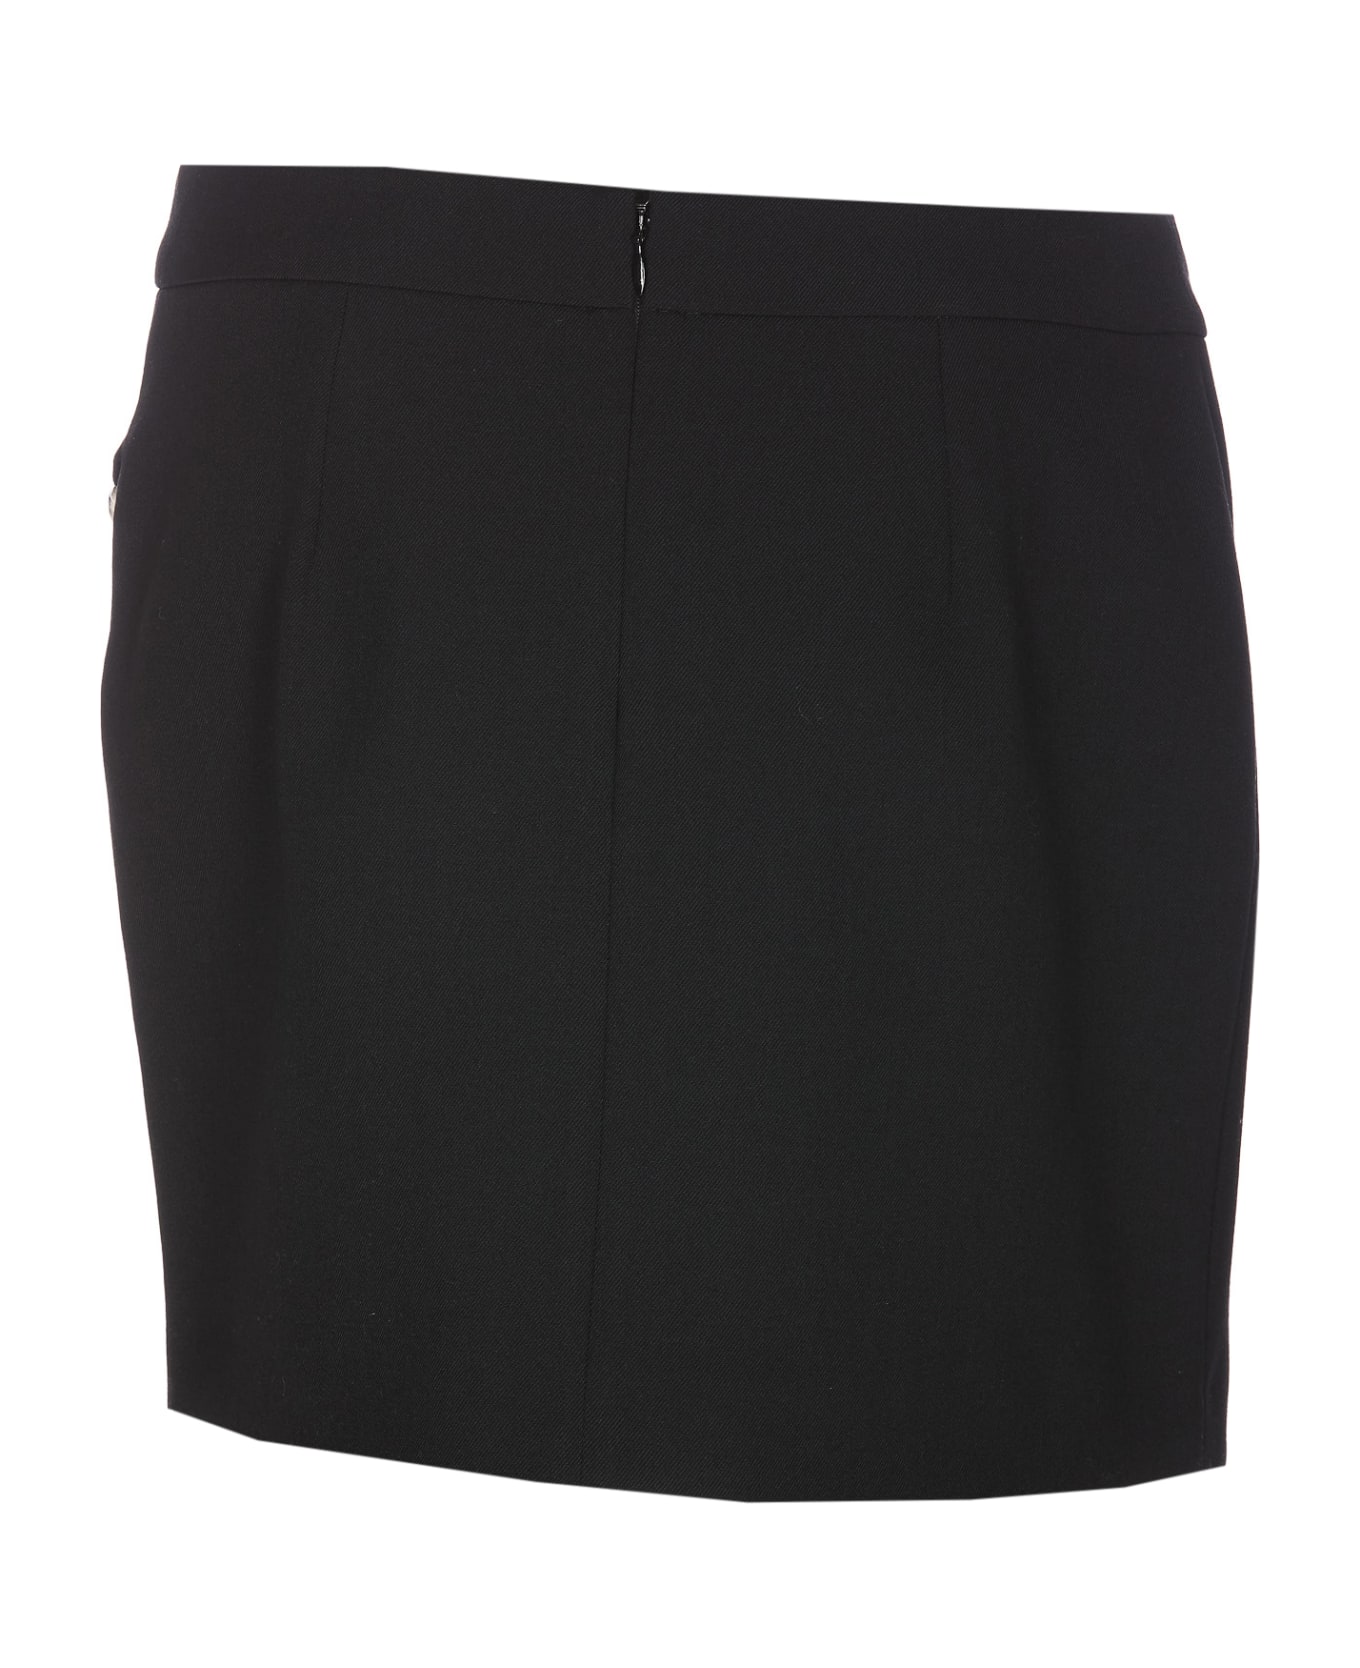 Stella McCartney Falabella Chain Mini Skirt - BLACK